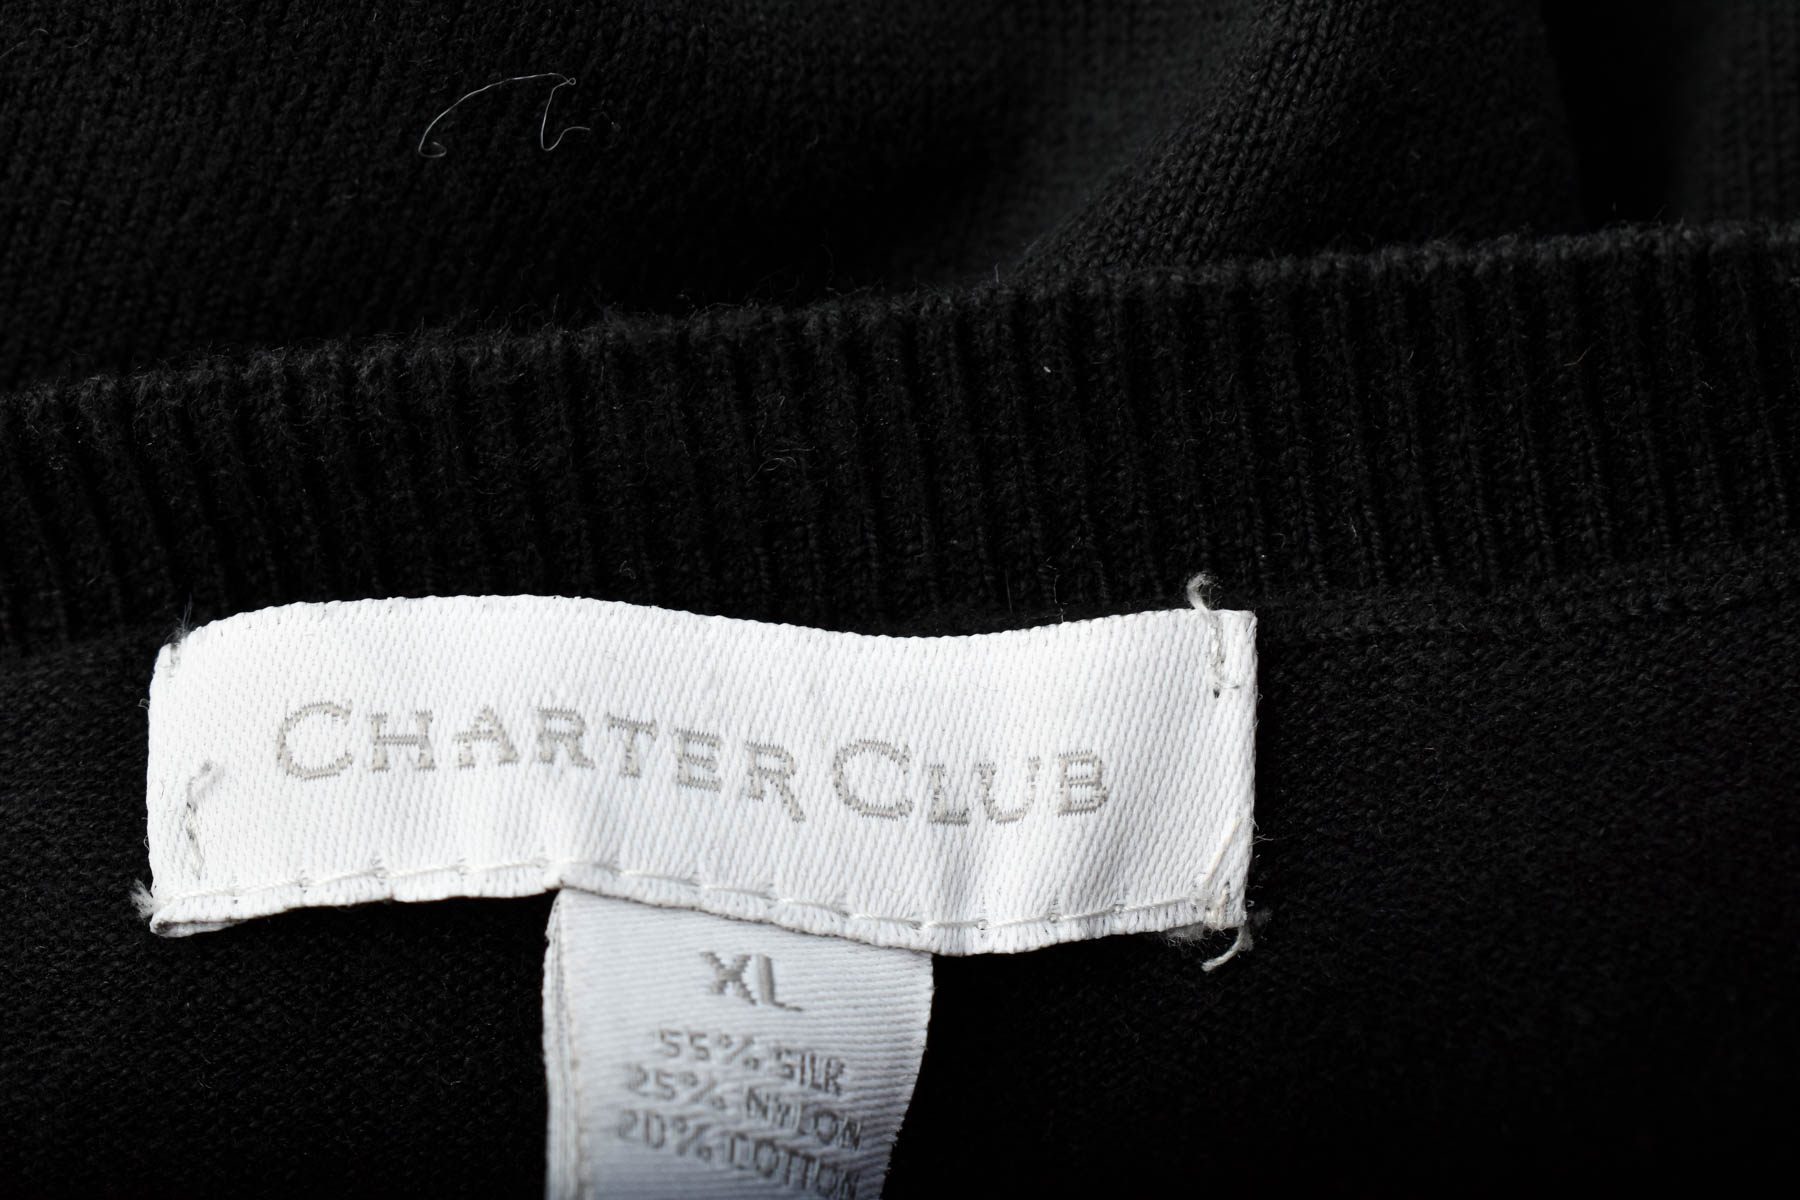 Women's cardigan - Charter Club - 2